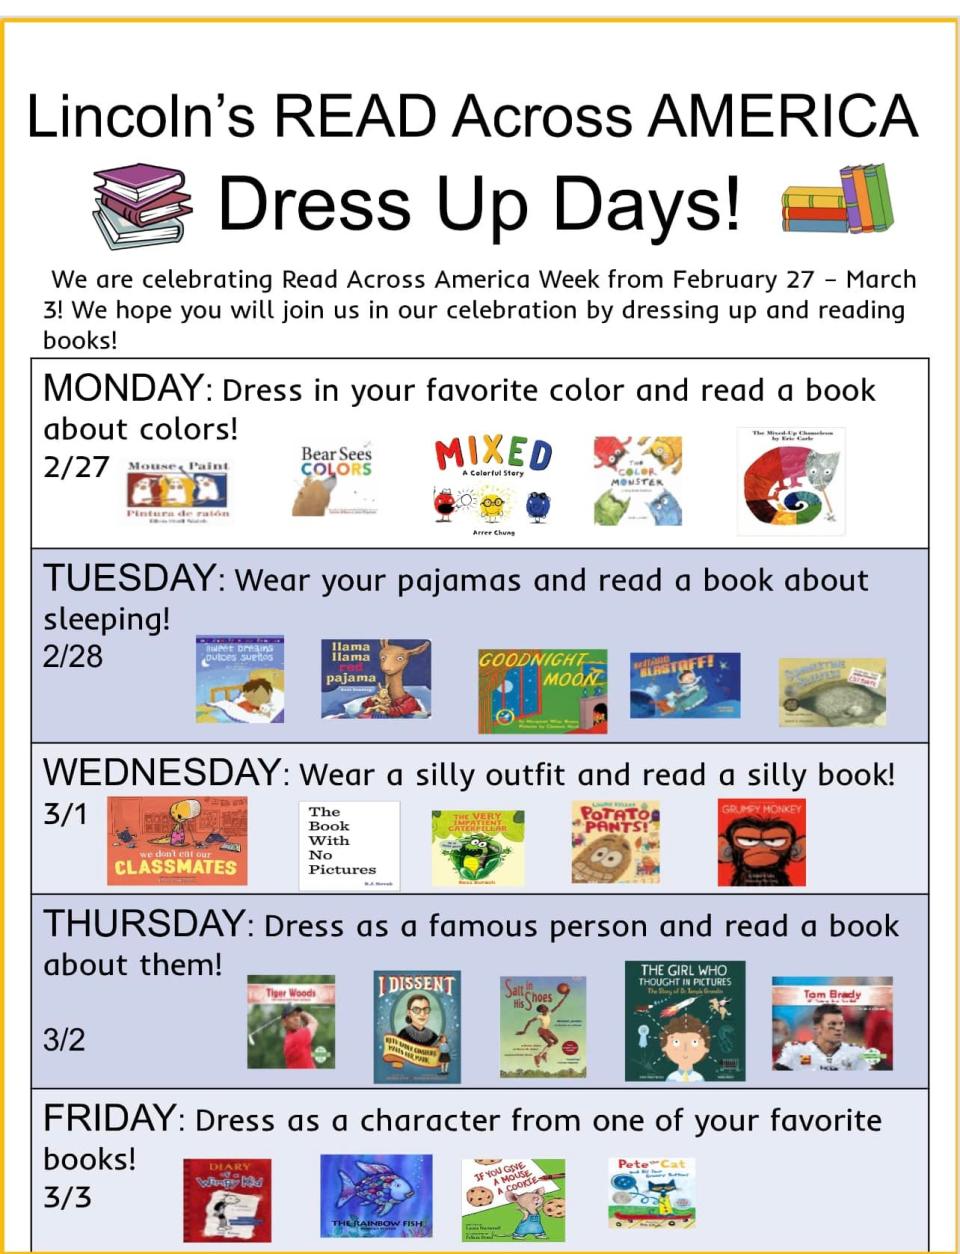 Lincoln Elementary in Leland will observed Read Across America week, Feb. 27-March 3.